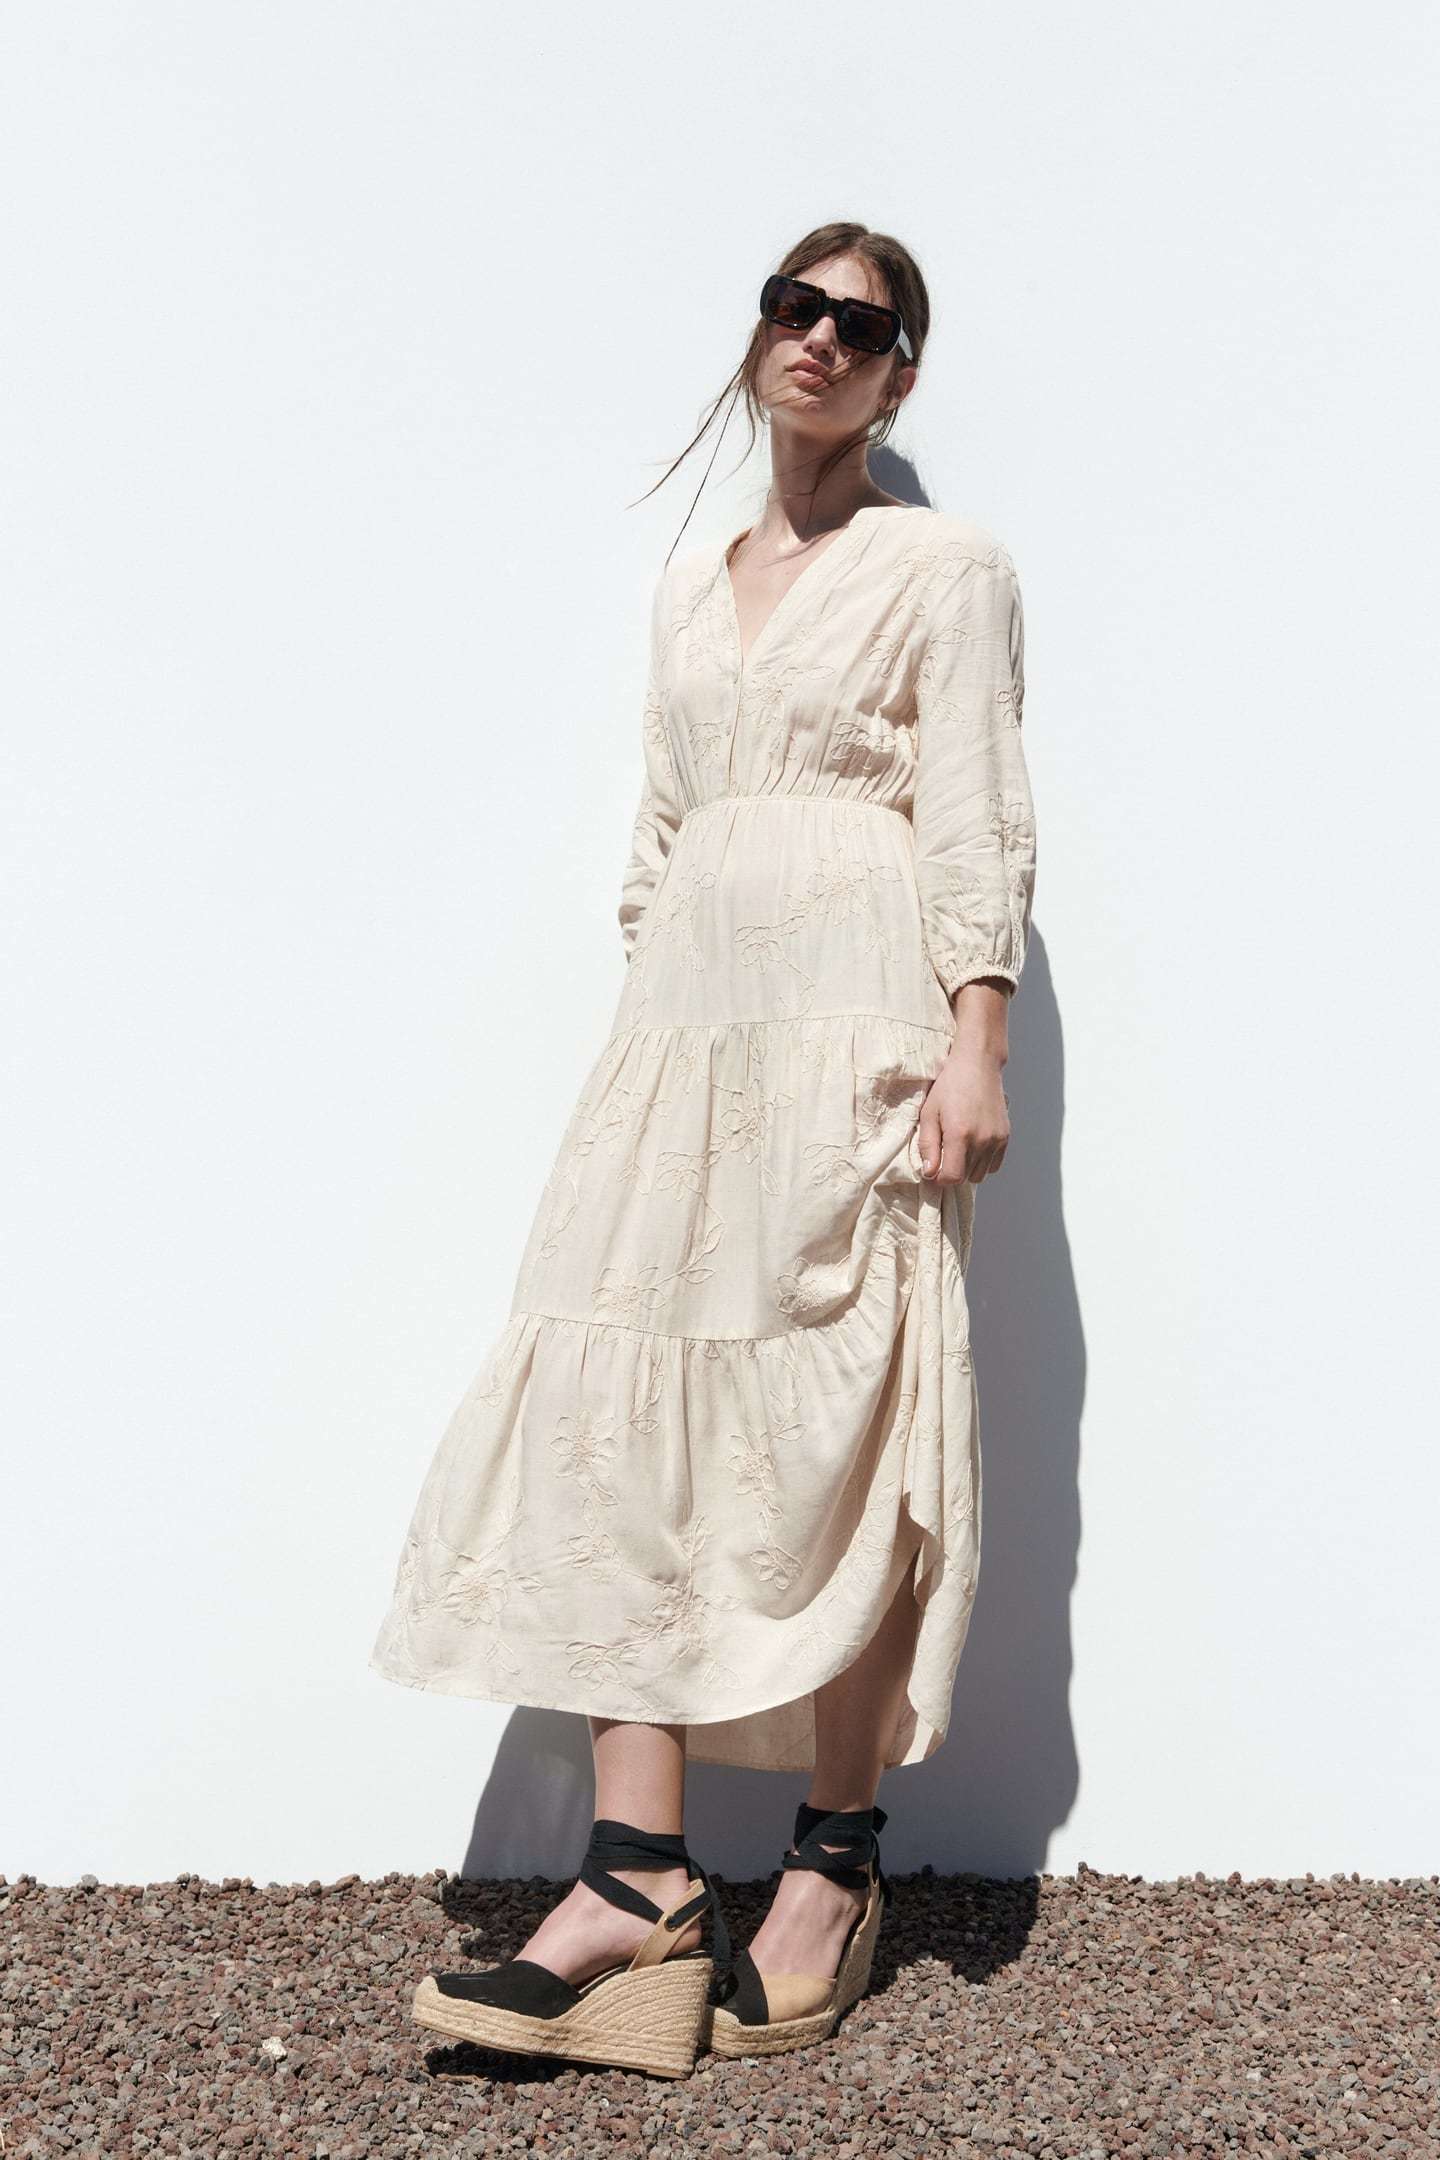 Vestido blanco roto, de Zara (49,95 euros).